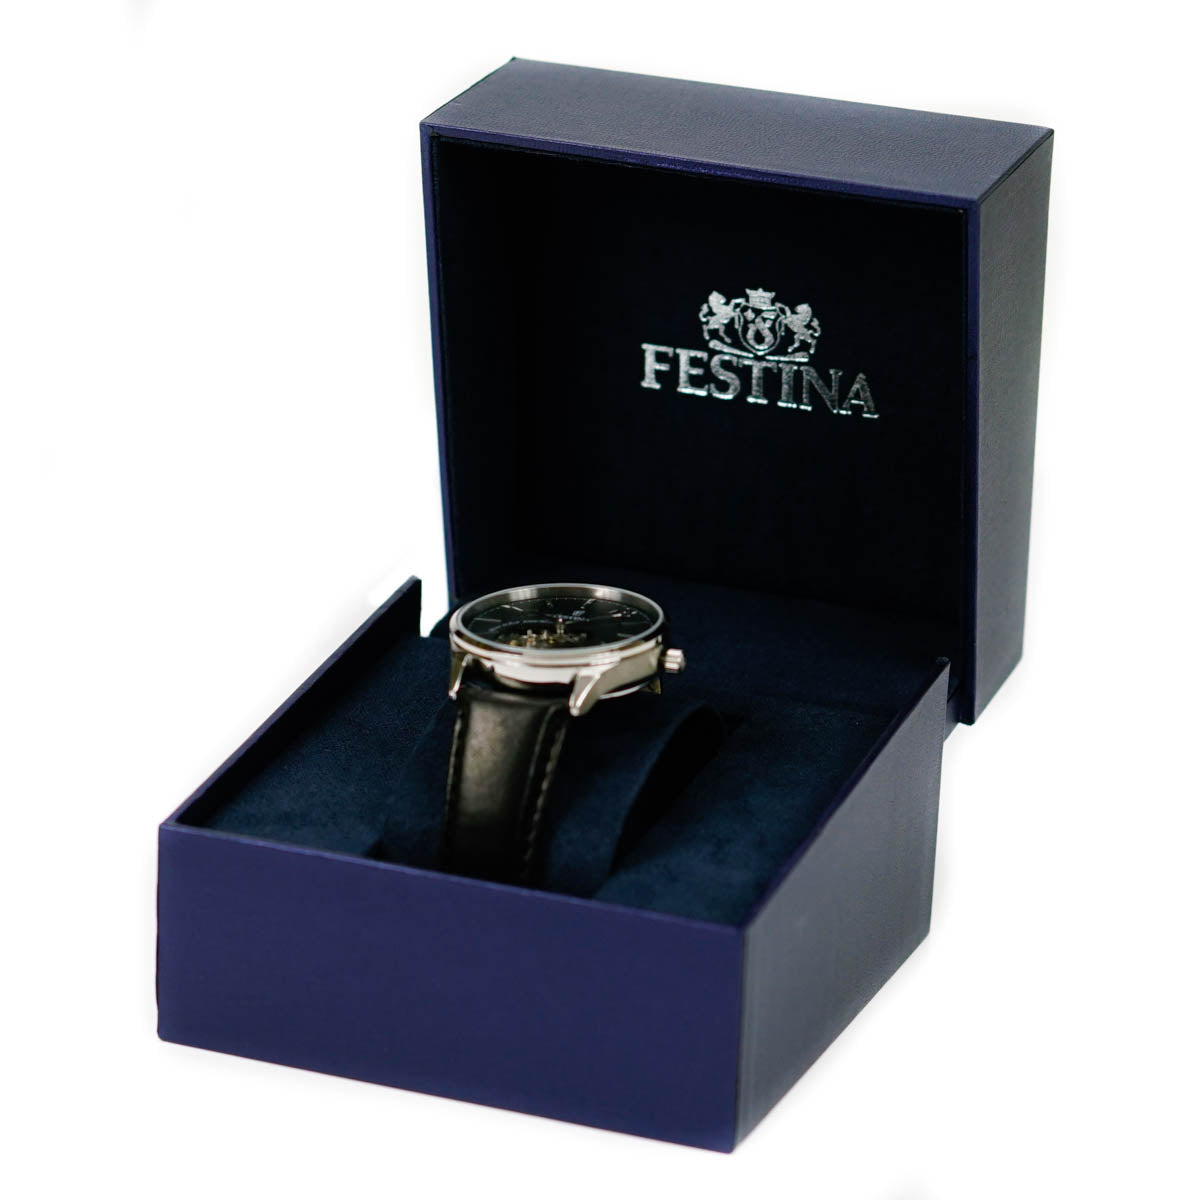 Festina Automatic Black Leather Watch F6846-4